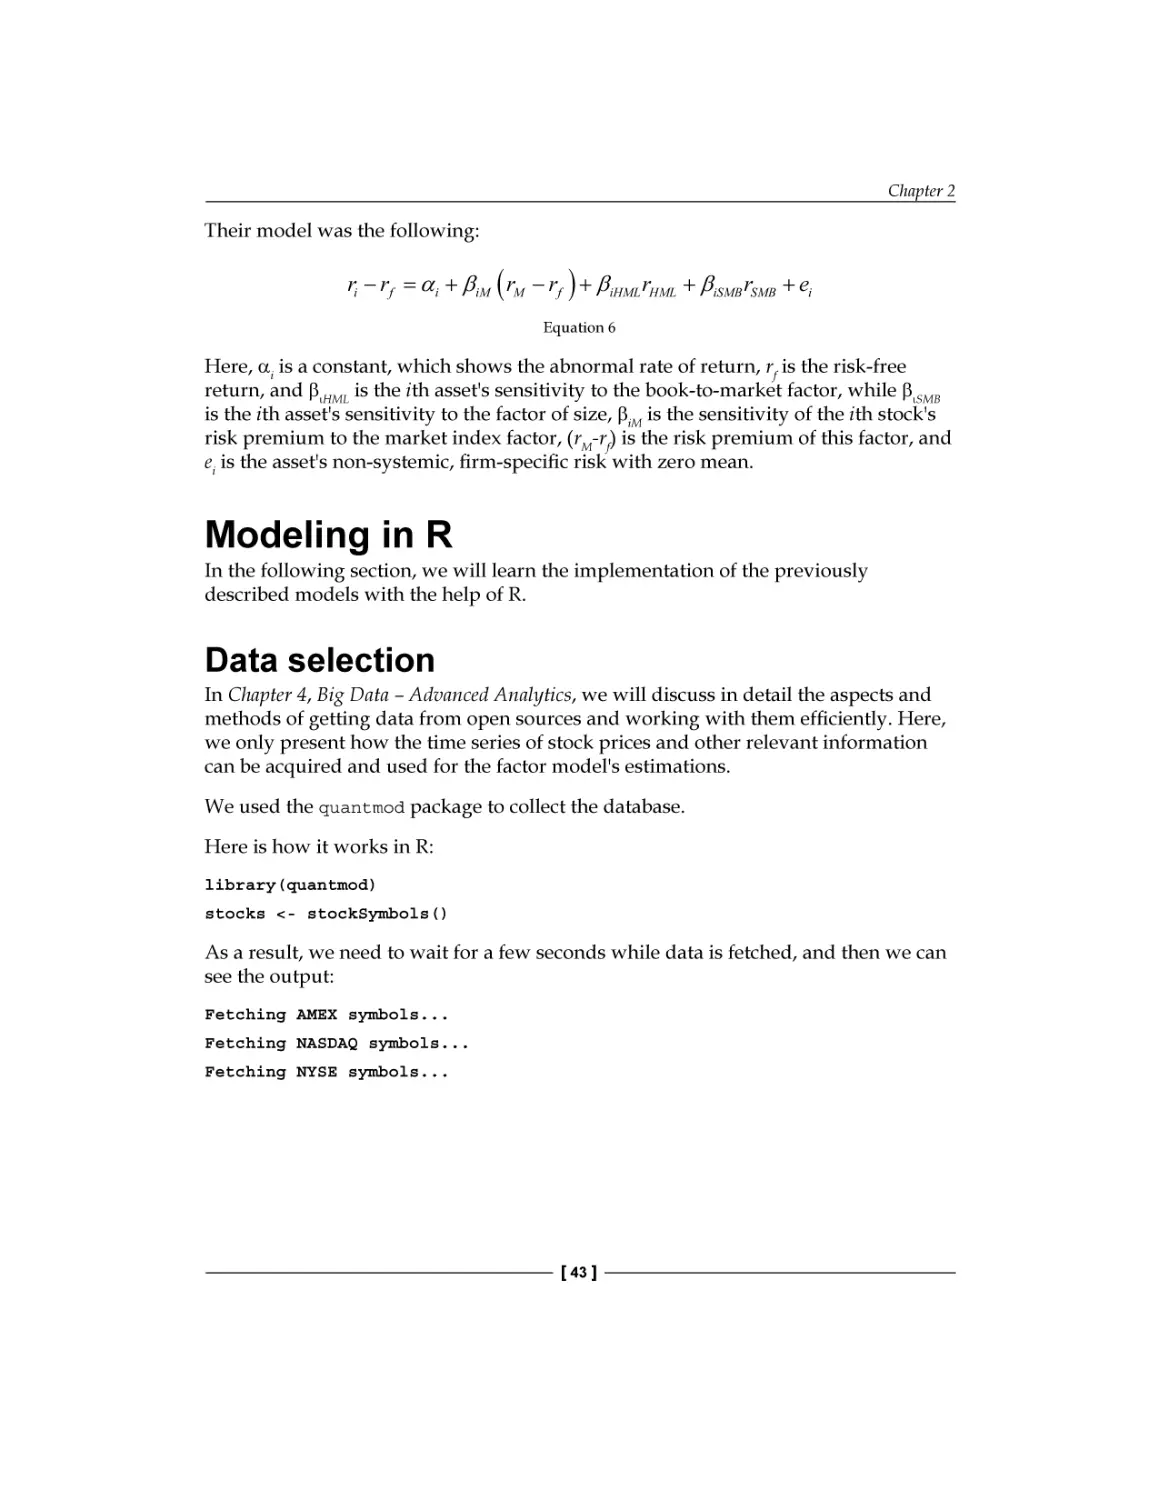 Modeling in R
Data selection